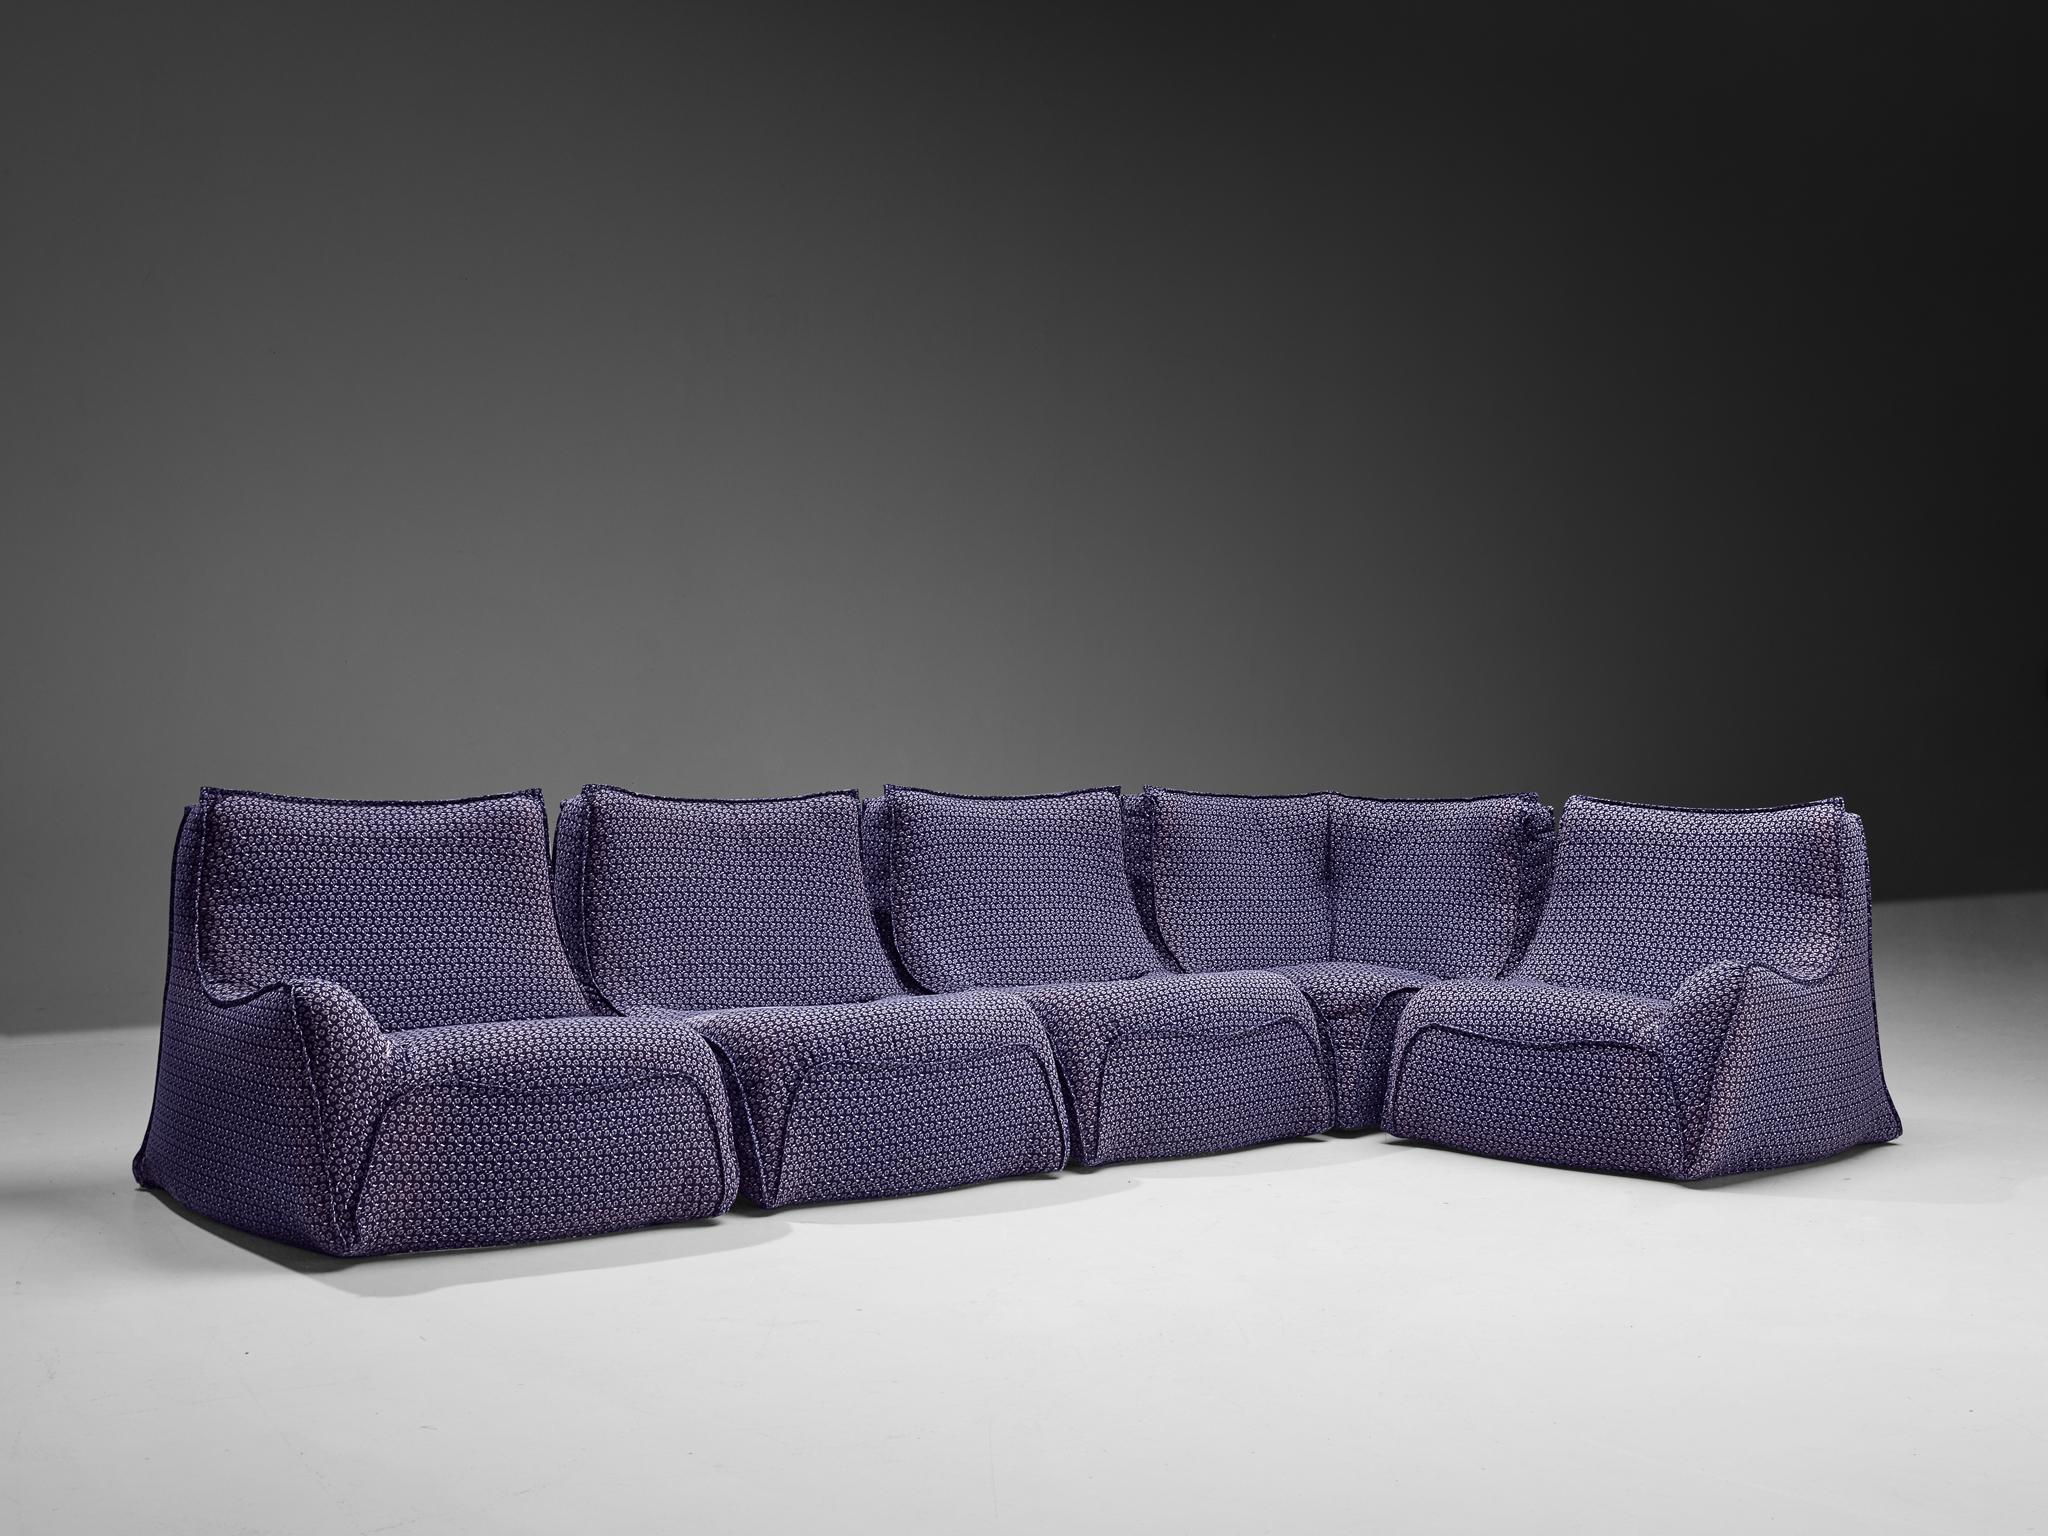 purple sectional sofa